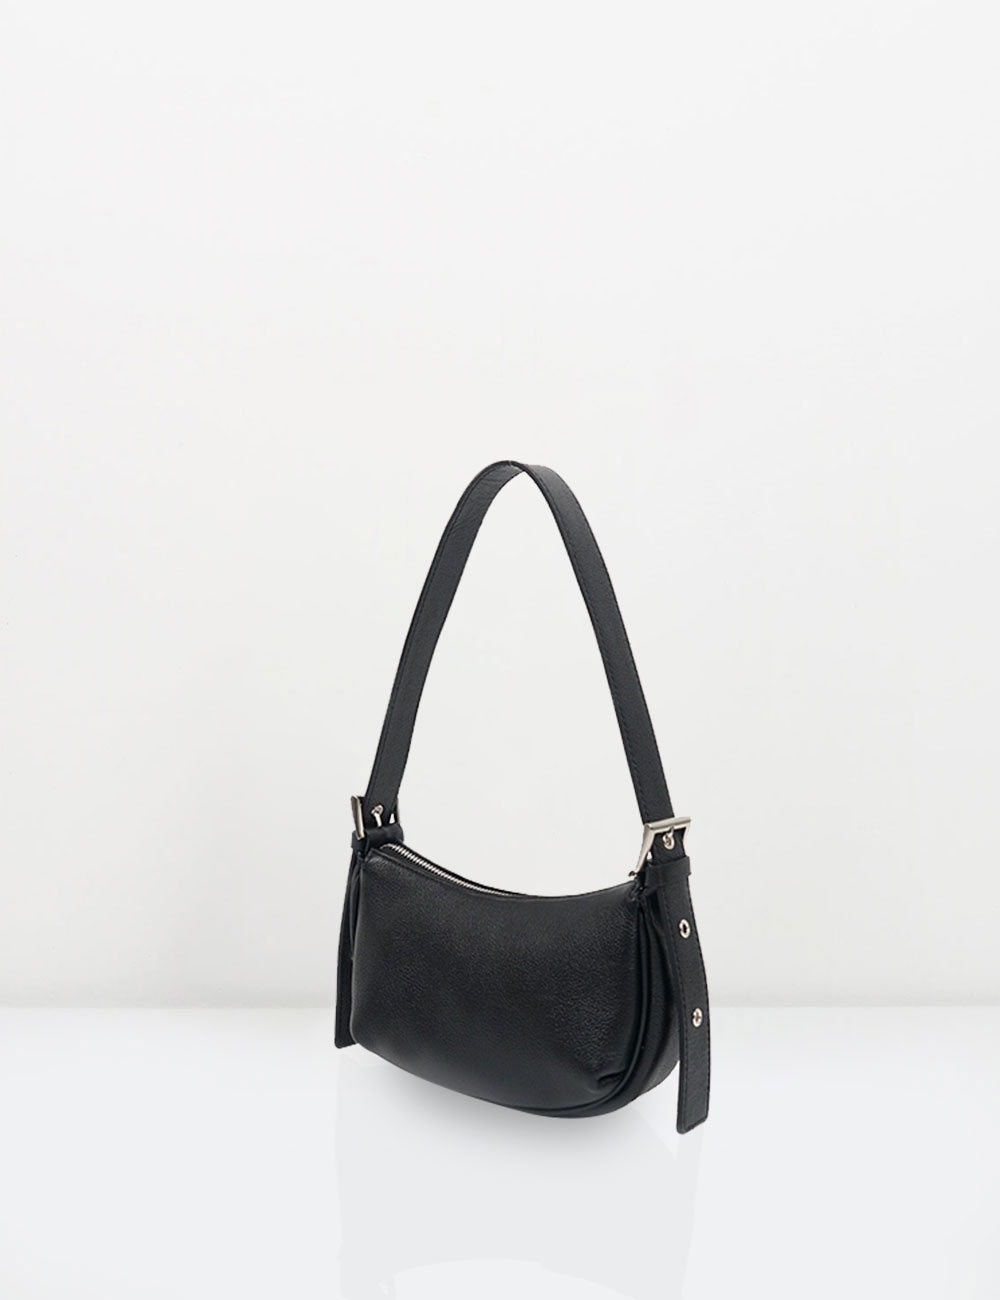 Milli bag / embo black (sold out)